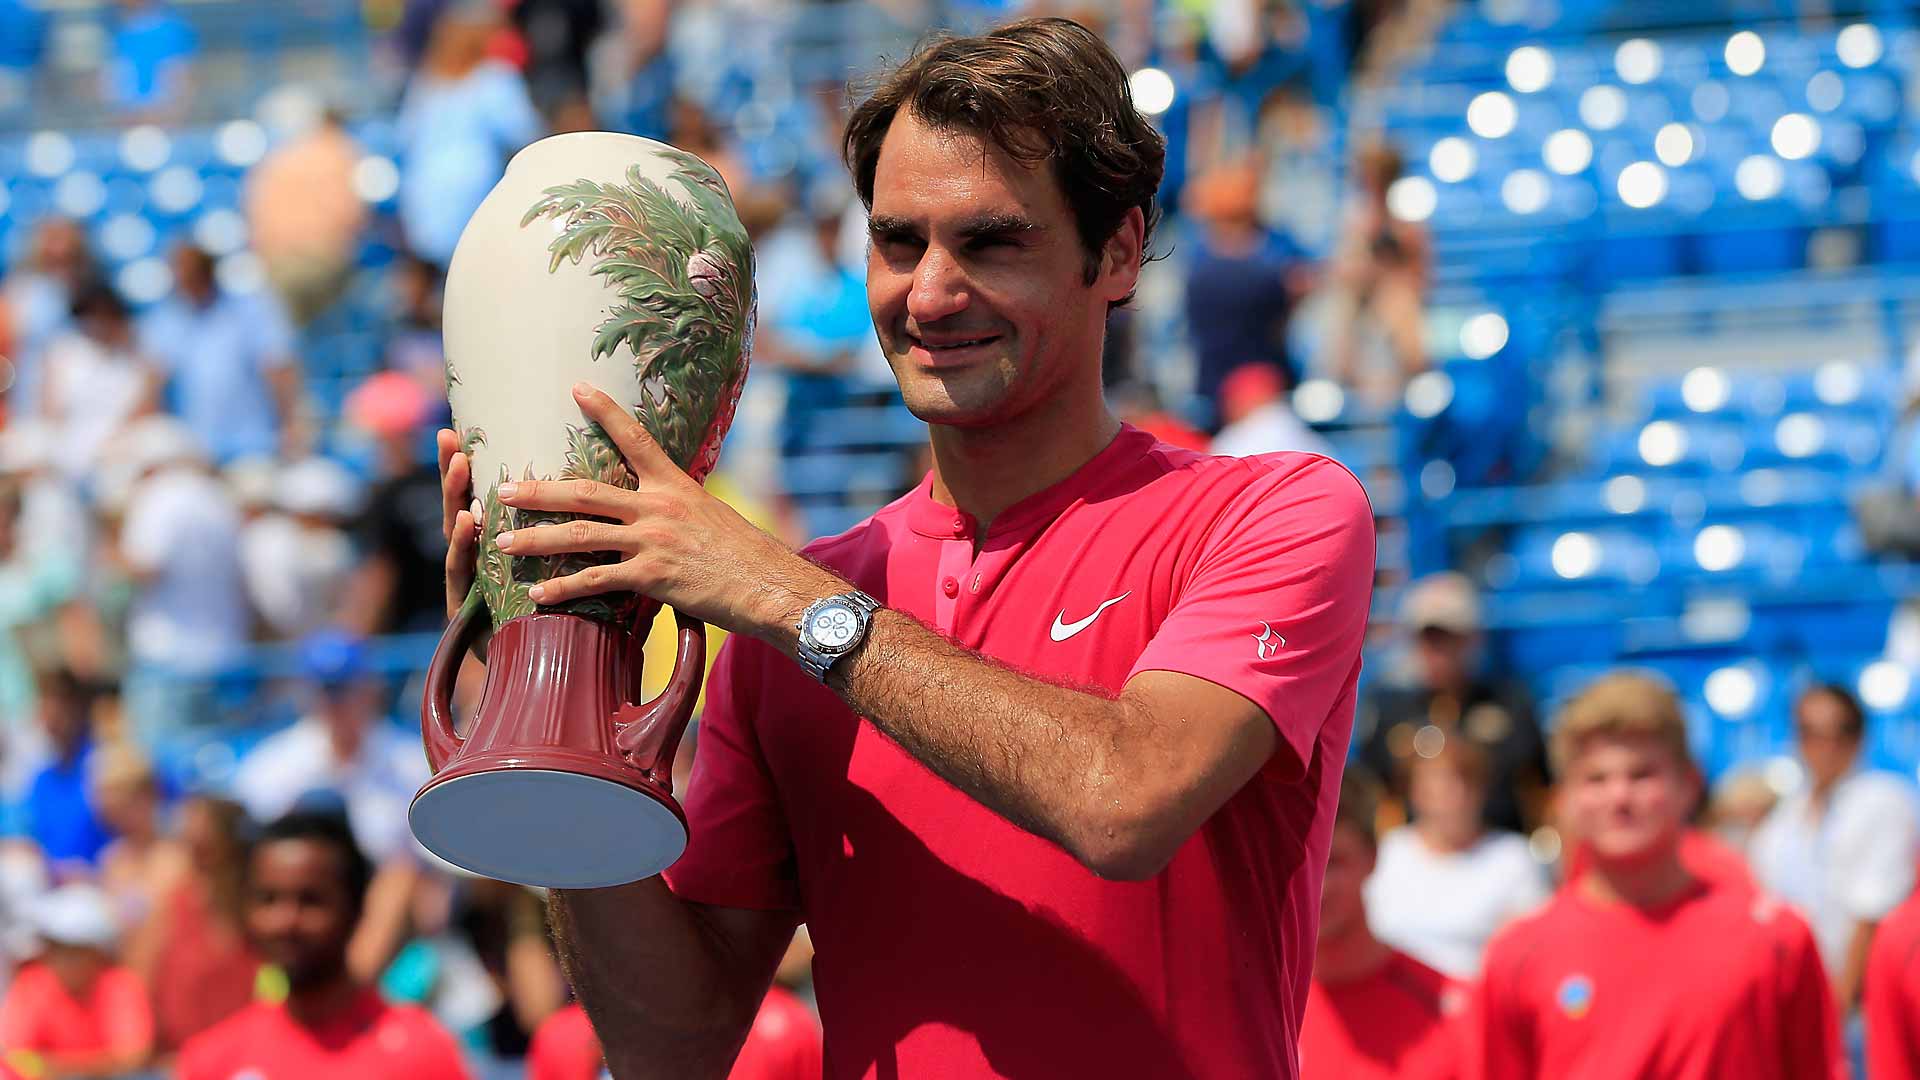 Cincinnati 2015 Final Federer Djokovic | ATP World Tour | Tennis1920 x 1080